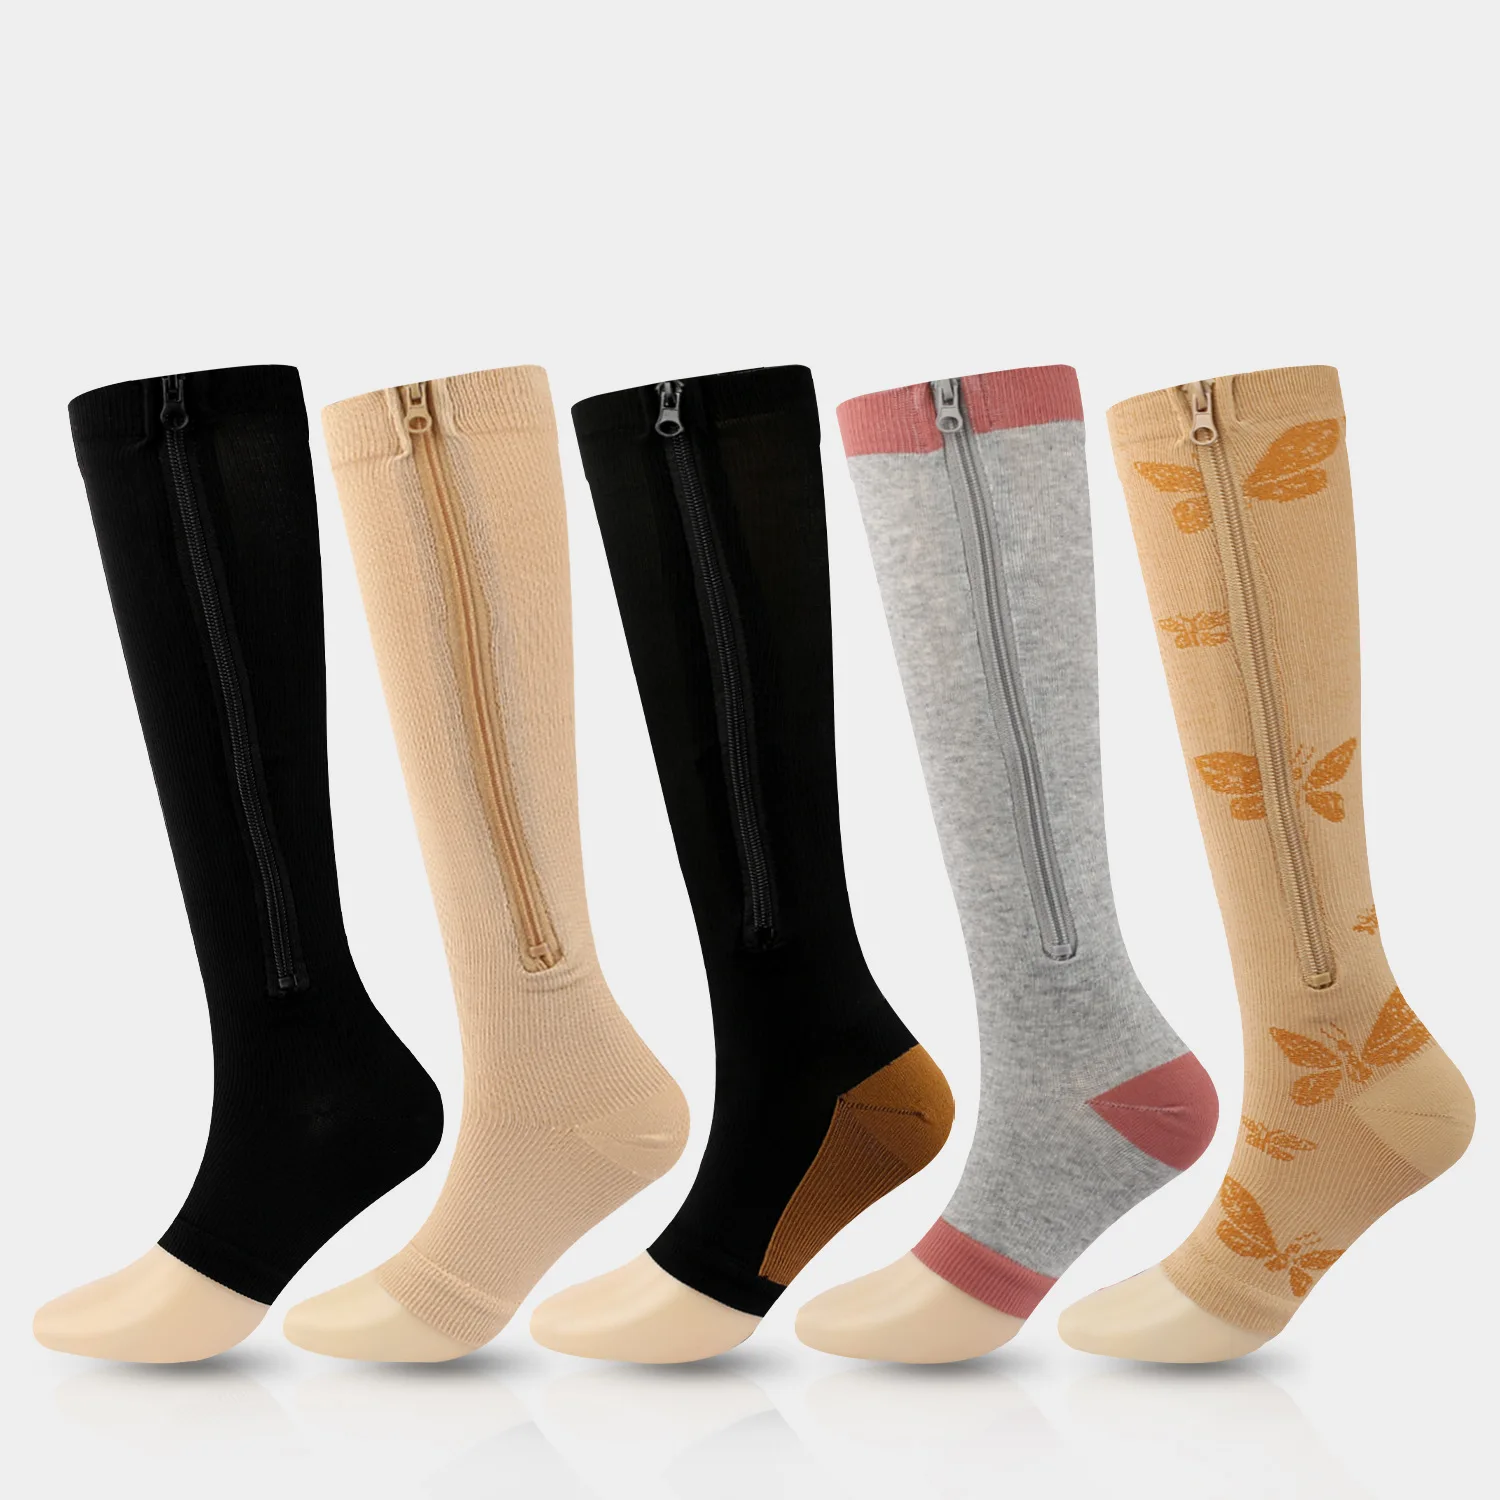 

Professional Zip Leg Support Knee-high running socks compression Stockings Sox Open Toe Compression Zipper Socks 20-30mmhg